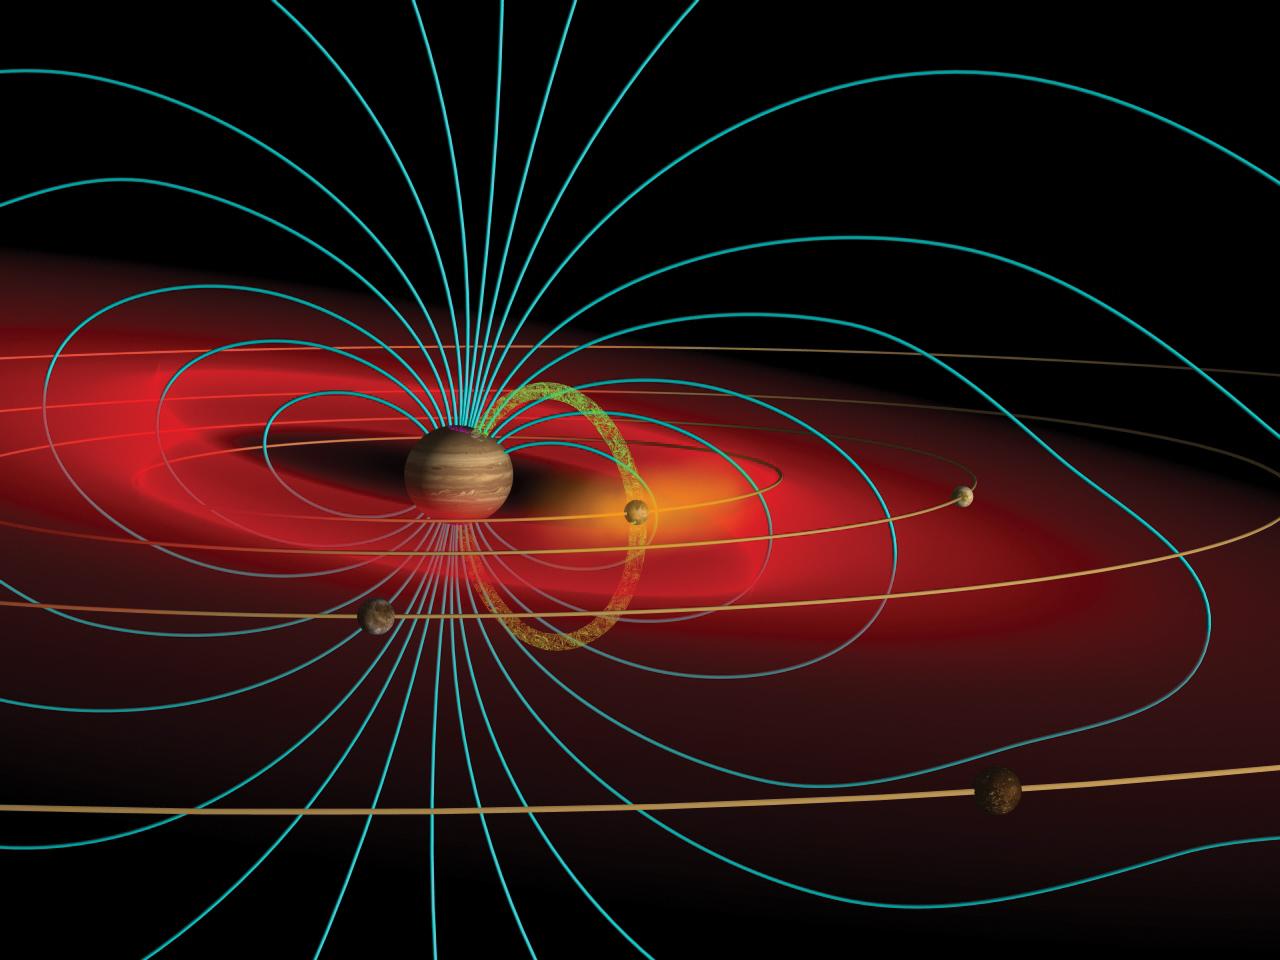 Jupiter's magnetosphere and the Io plasma torus